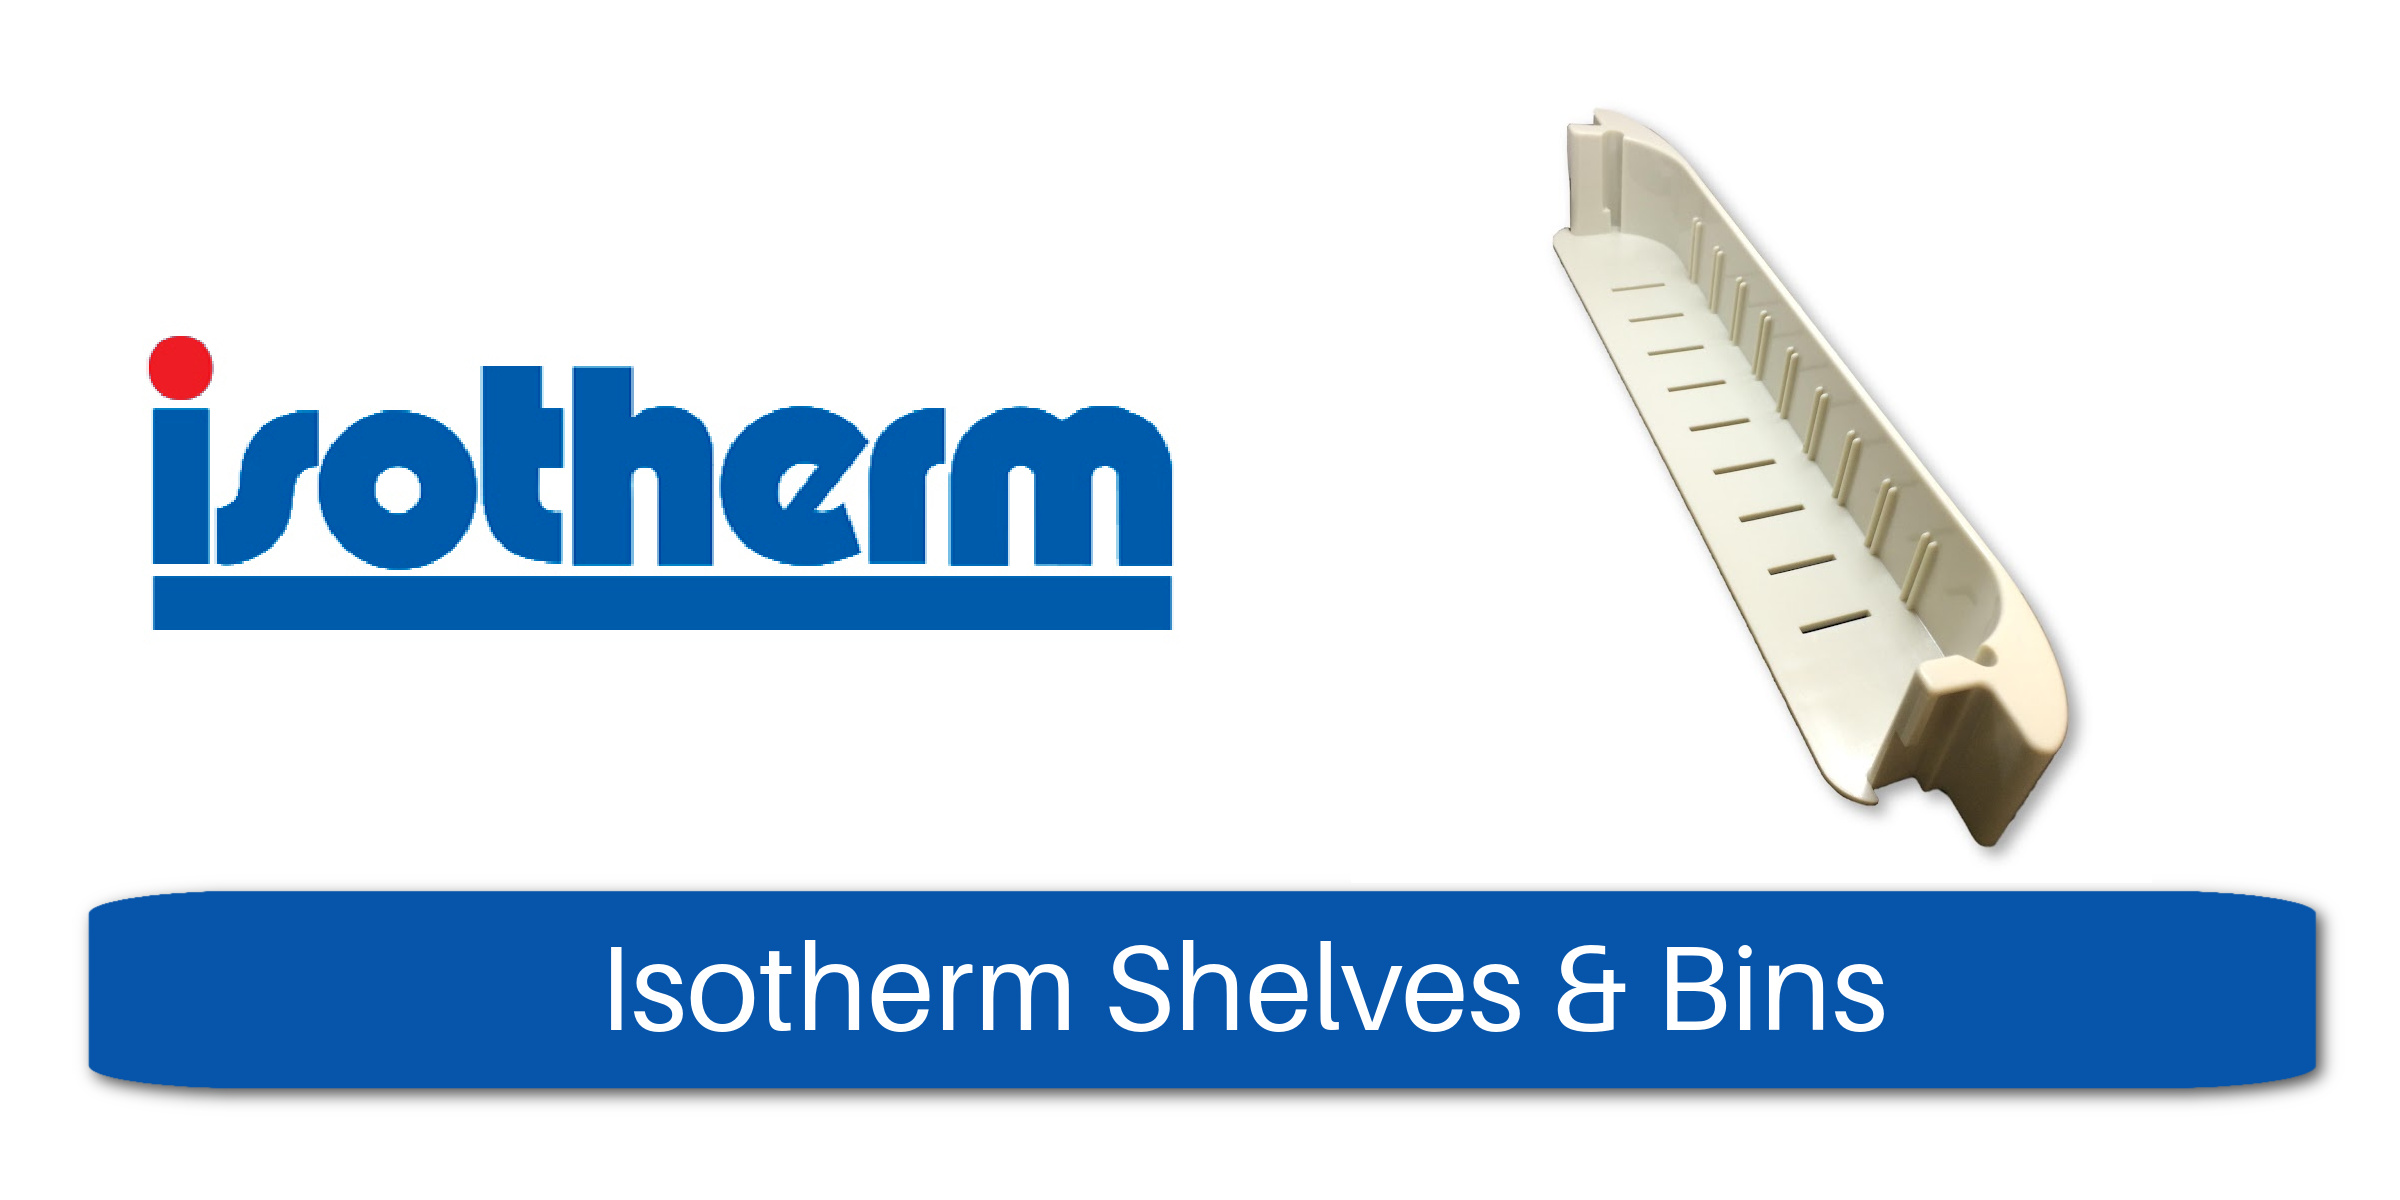 Isotherm Shelves & Bins